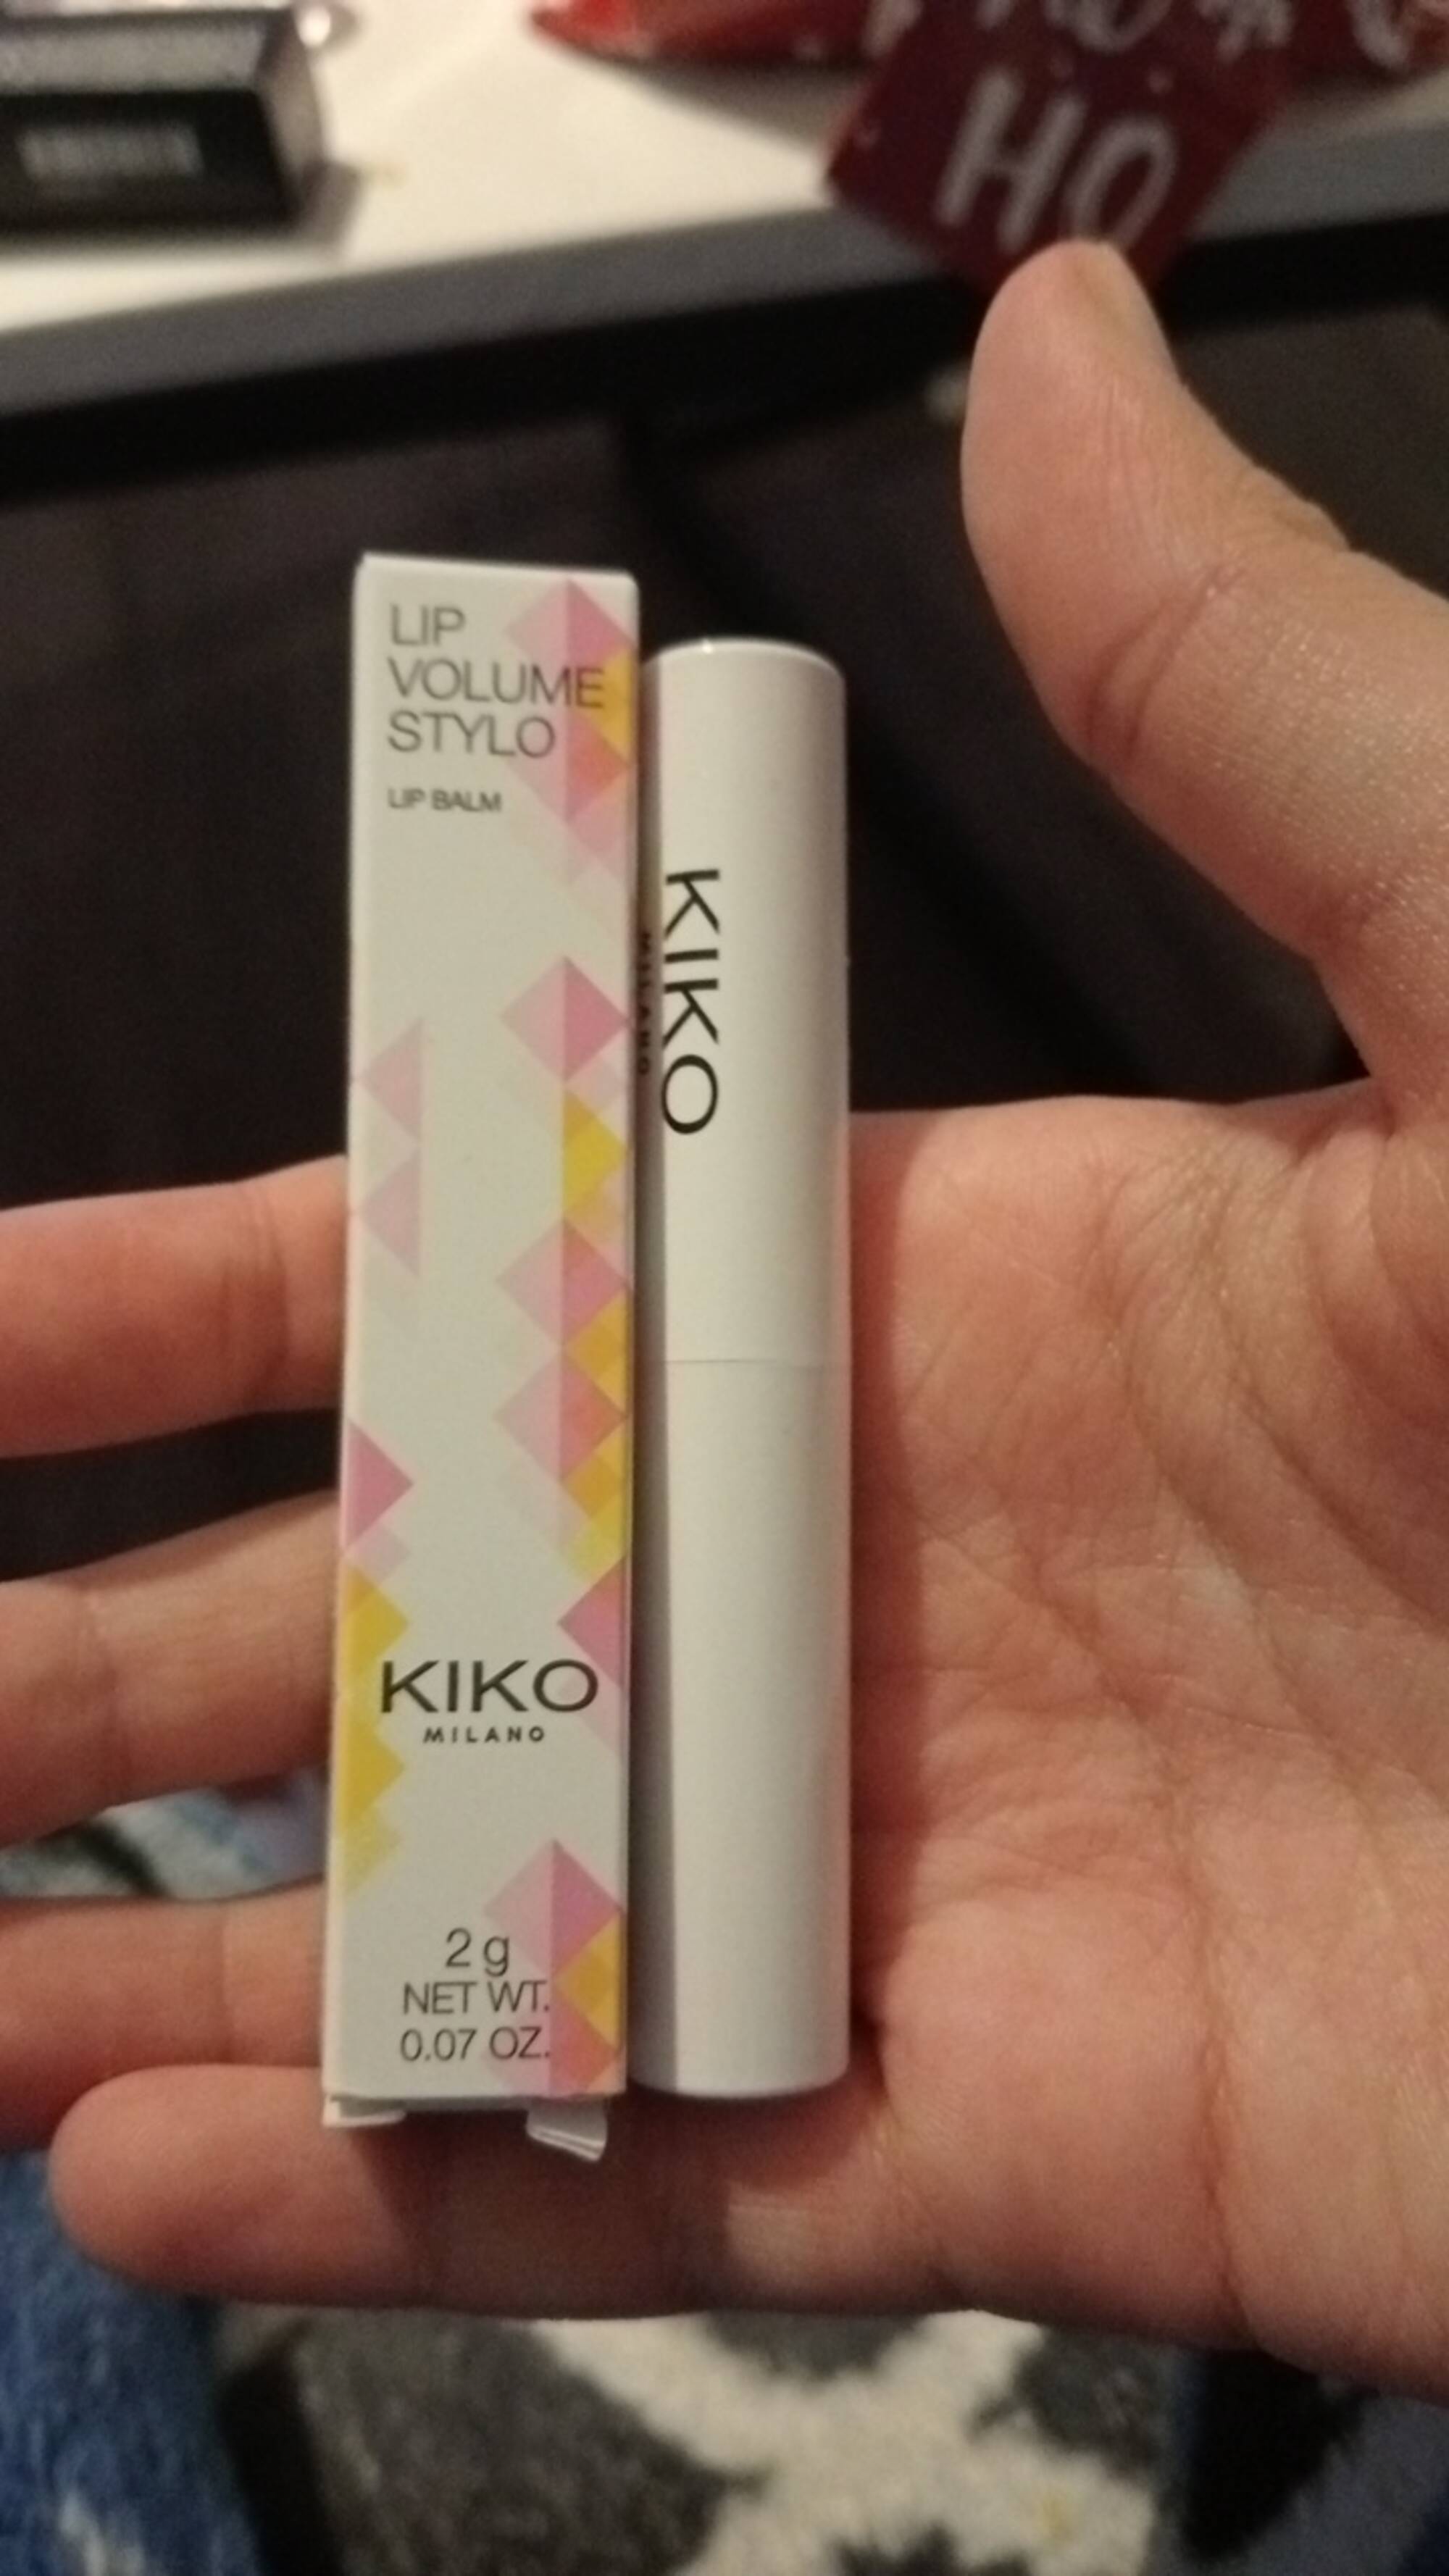 KIKO - Lip volume stylo - Lip balm